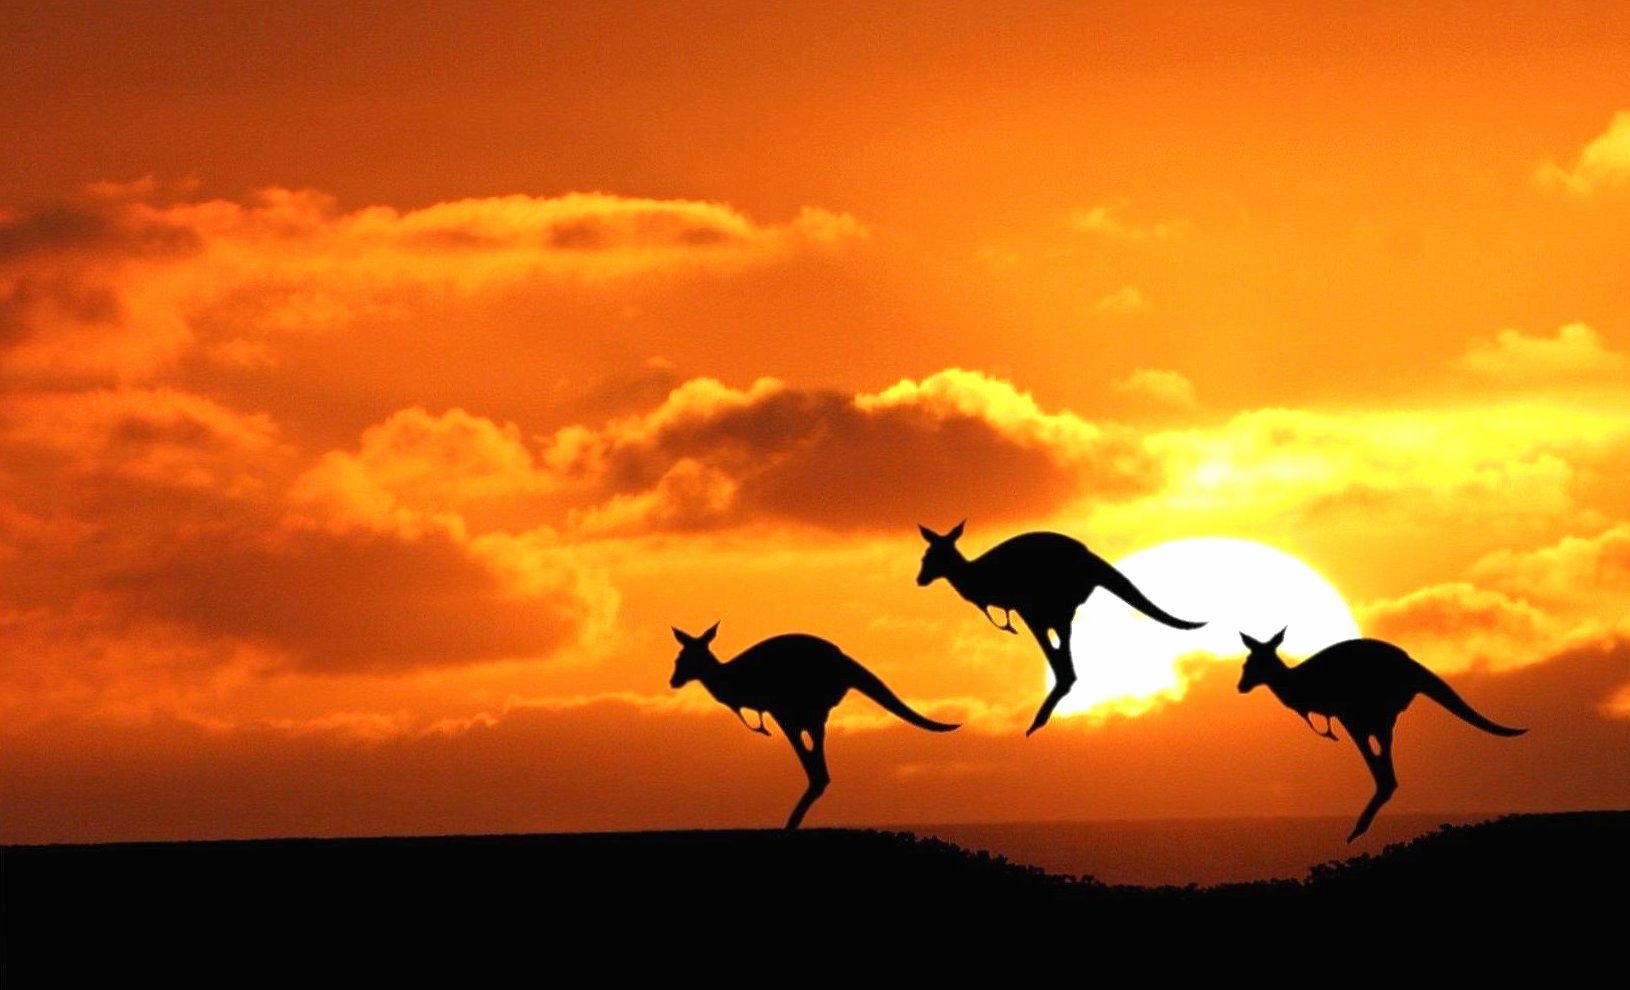 Sunset kangaroo at 1280 x 960 size wallpapers HD quality